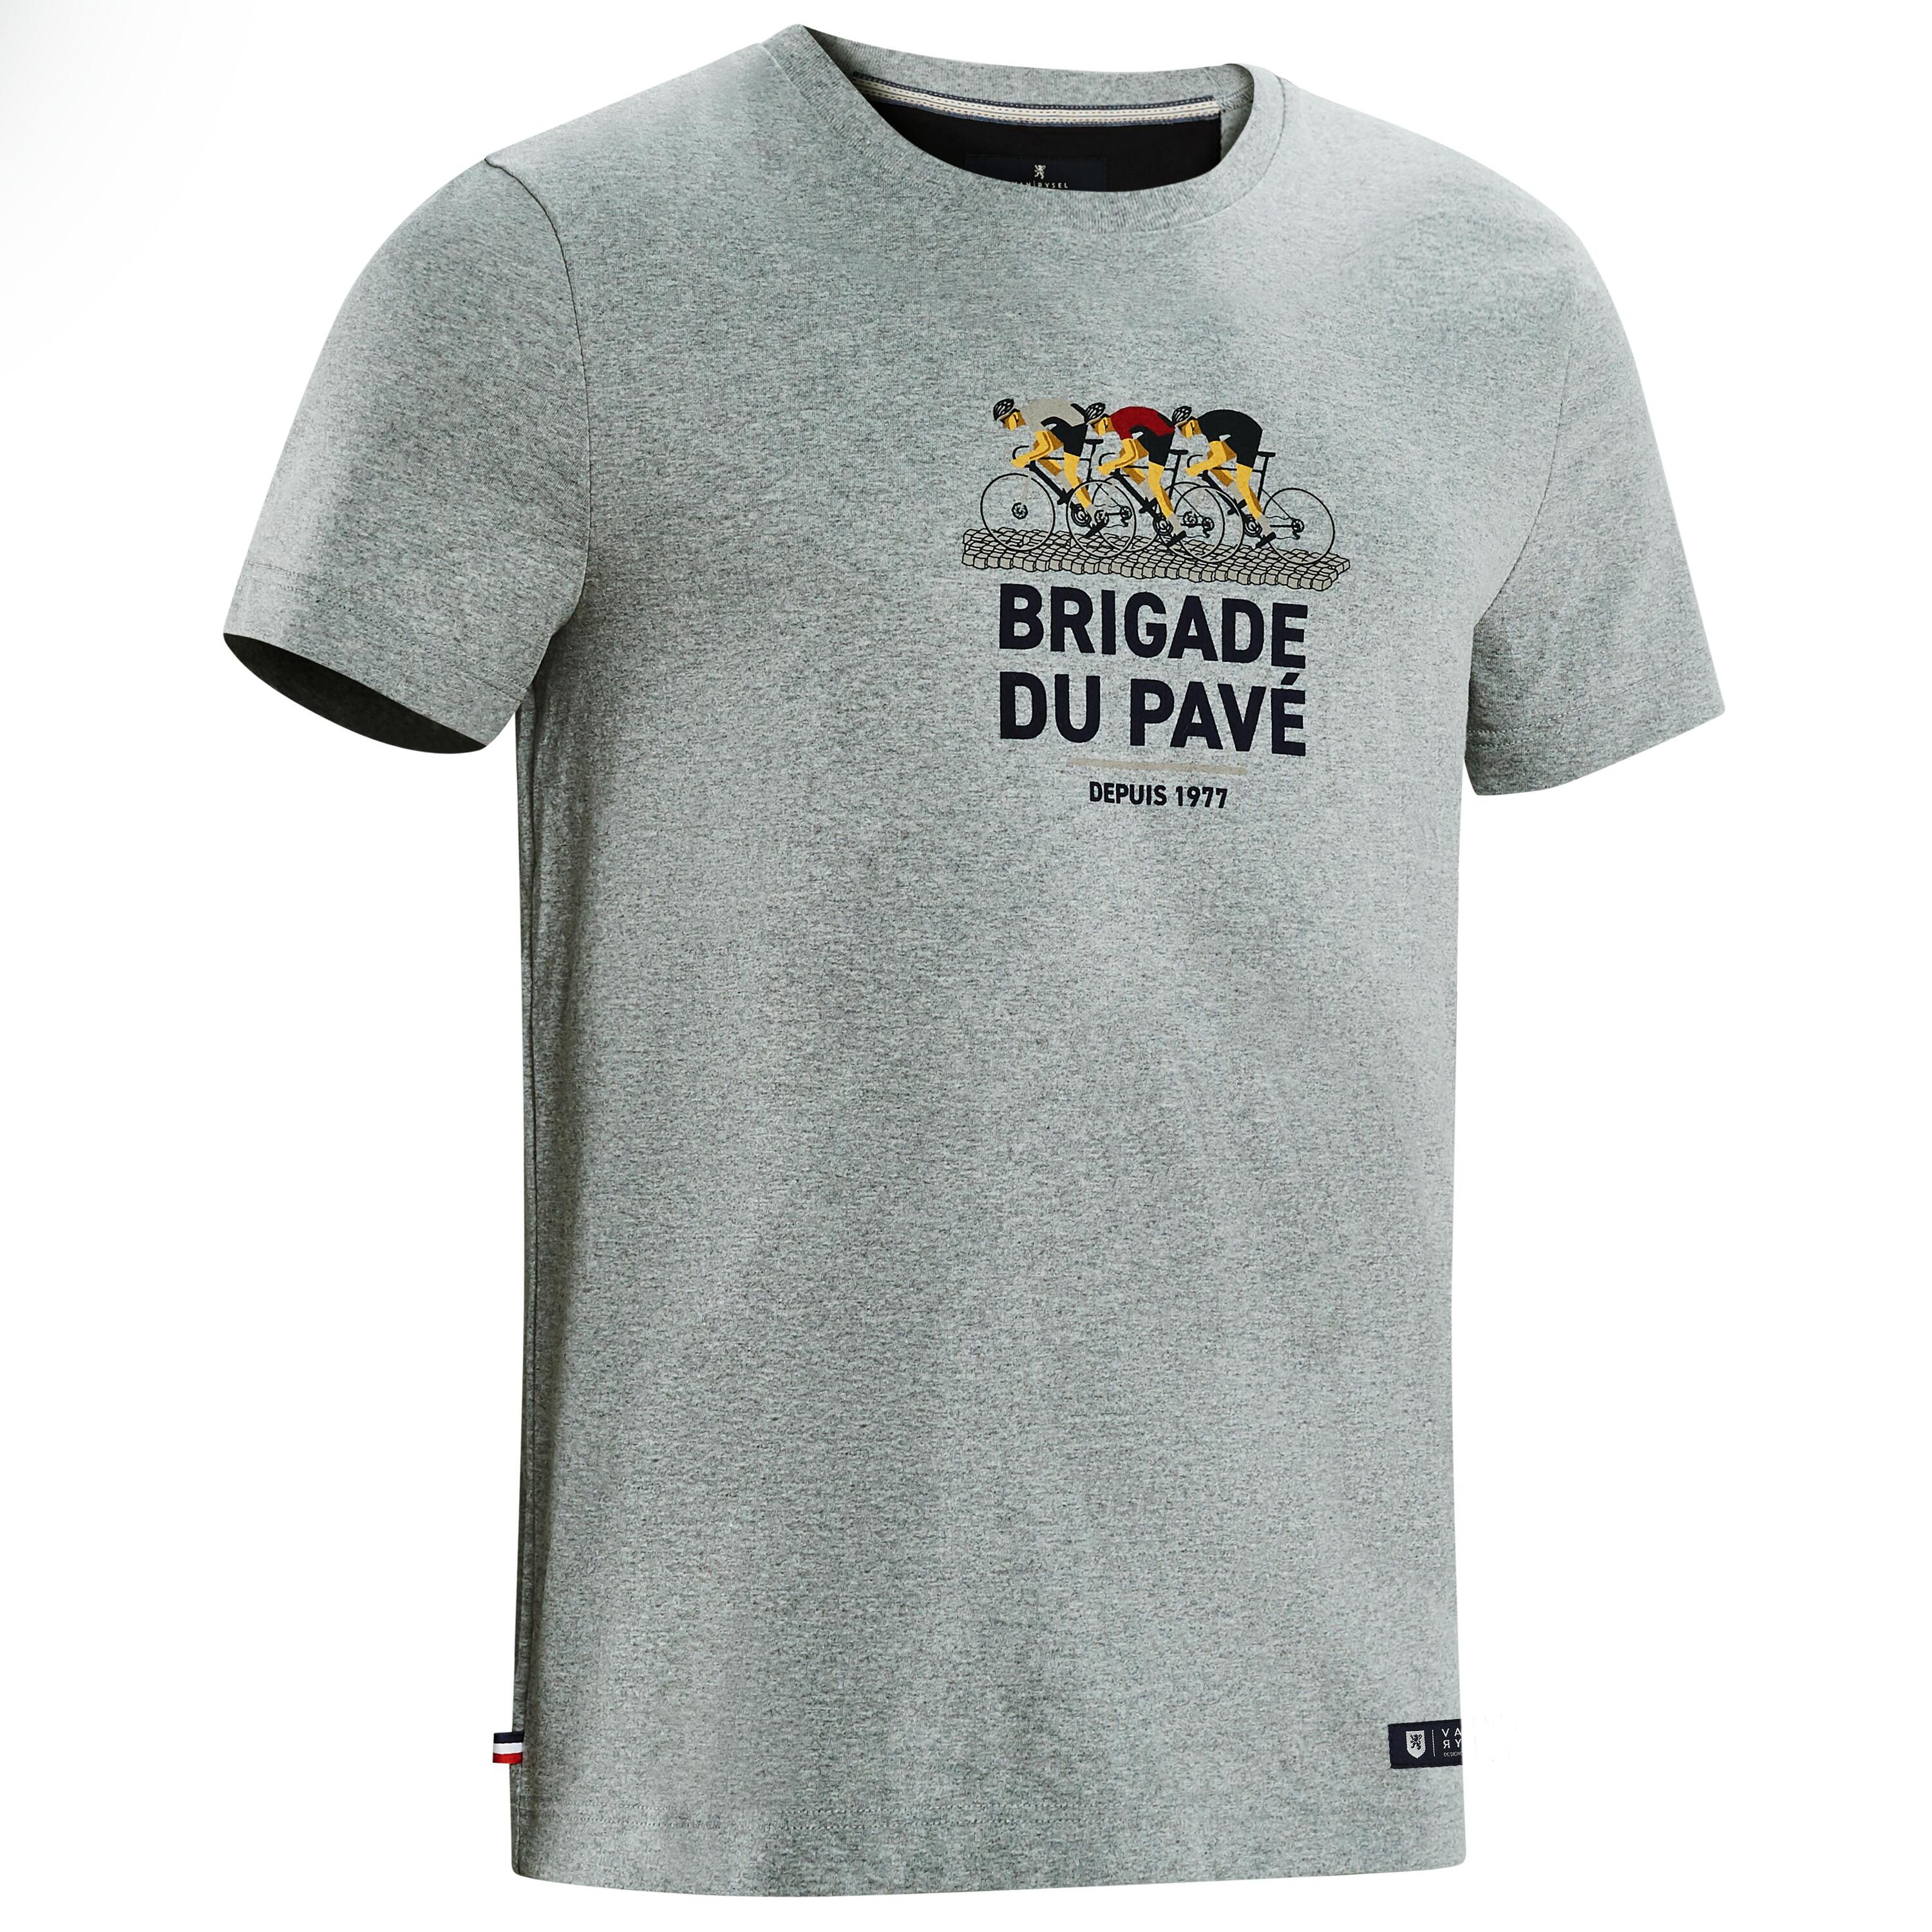 VAN RYSEL T-Shirt Made In France Brigade du Pavé - Grey